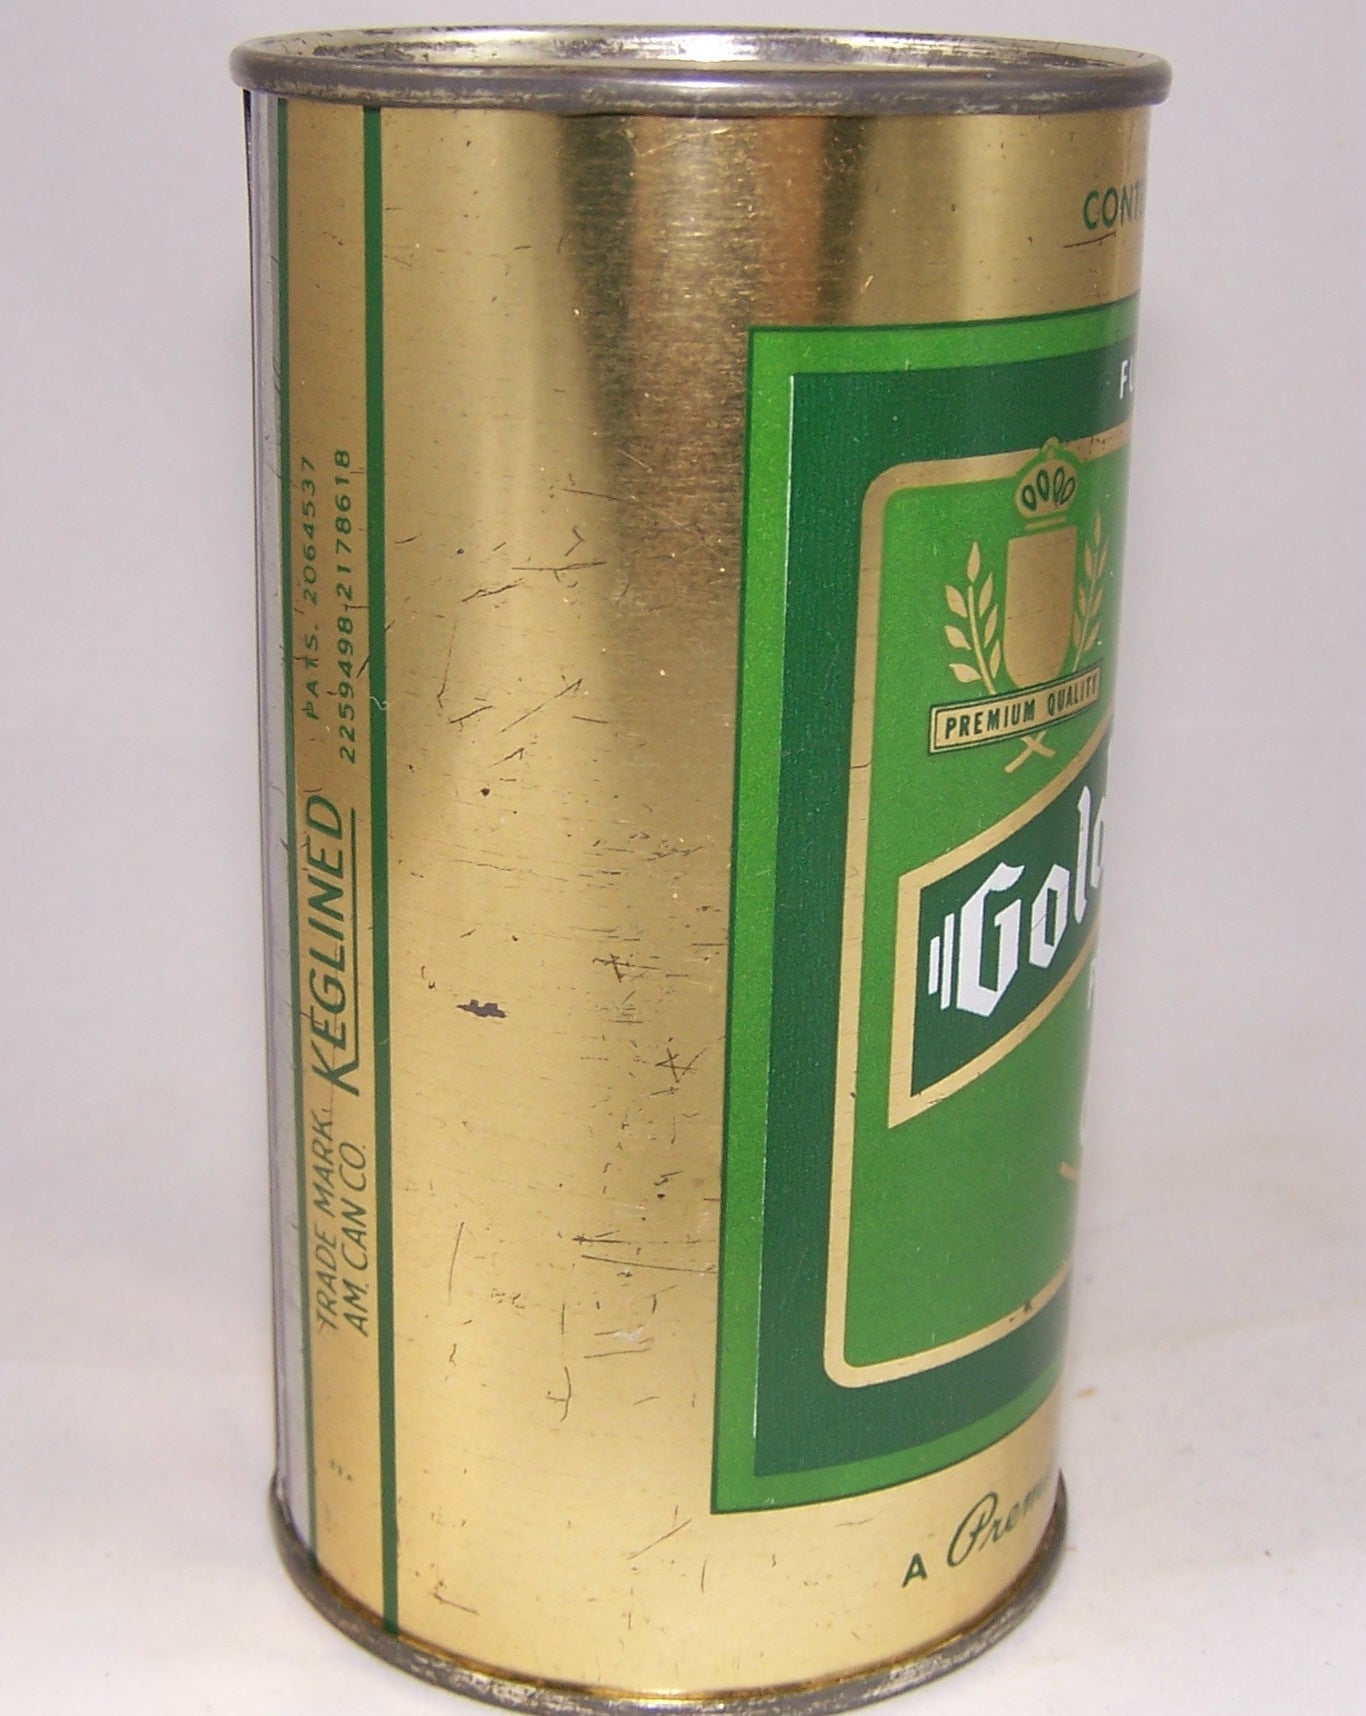 Golden Brau Premium Ale, USBC 72-20, Grade 1 Rolled